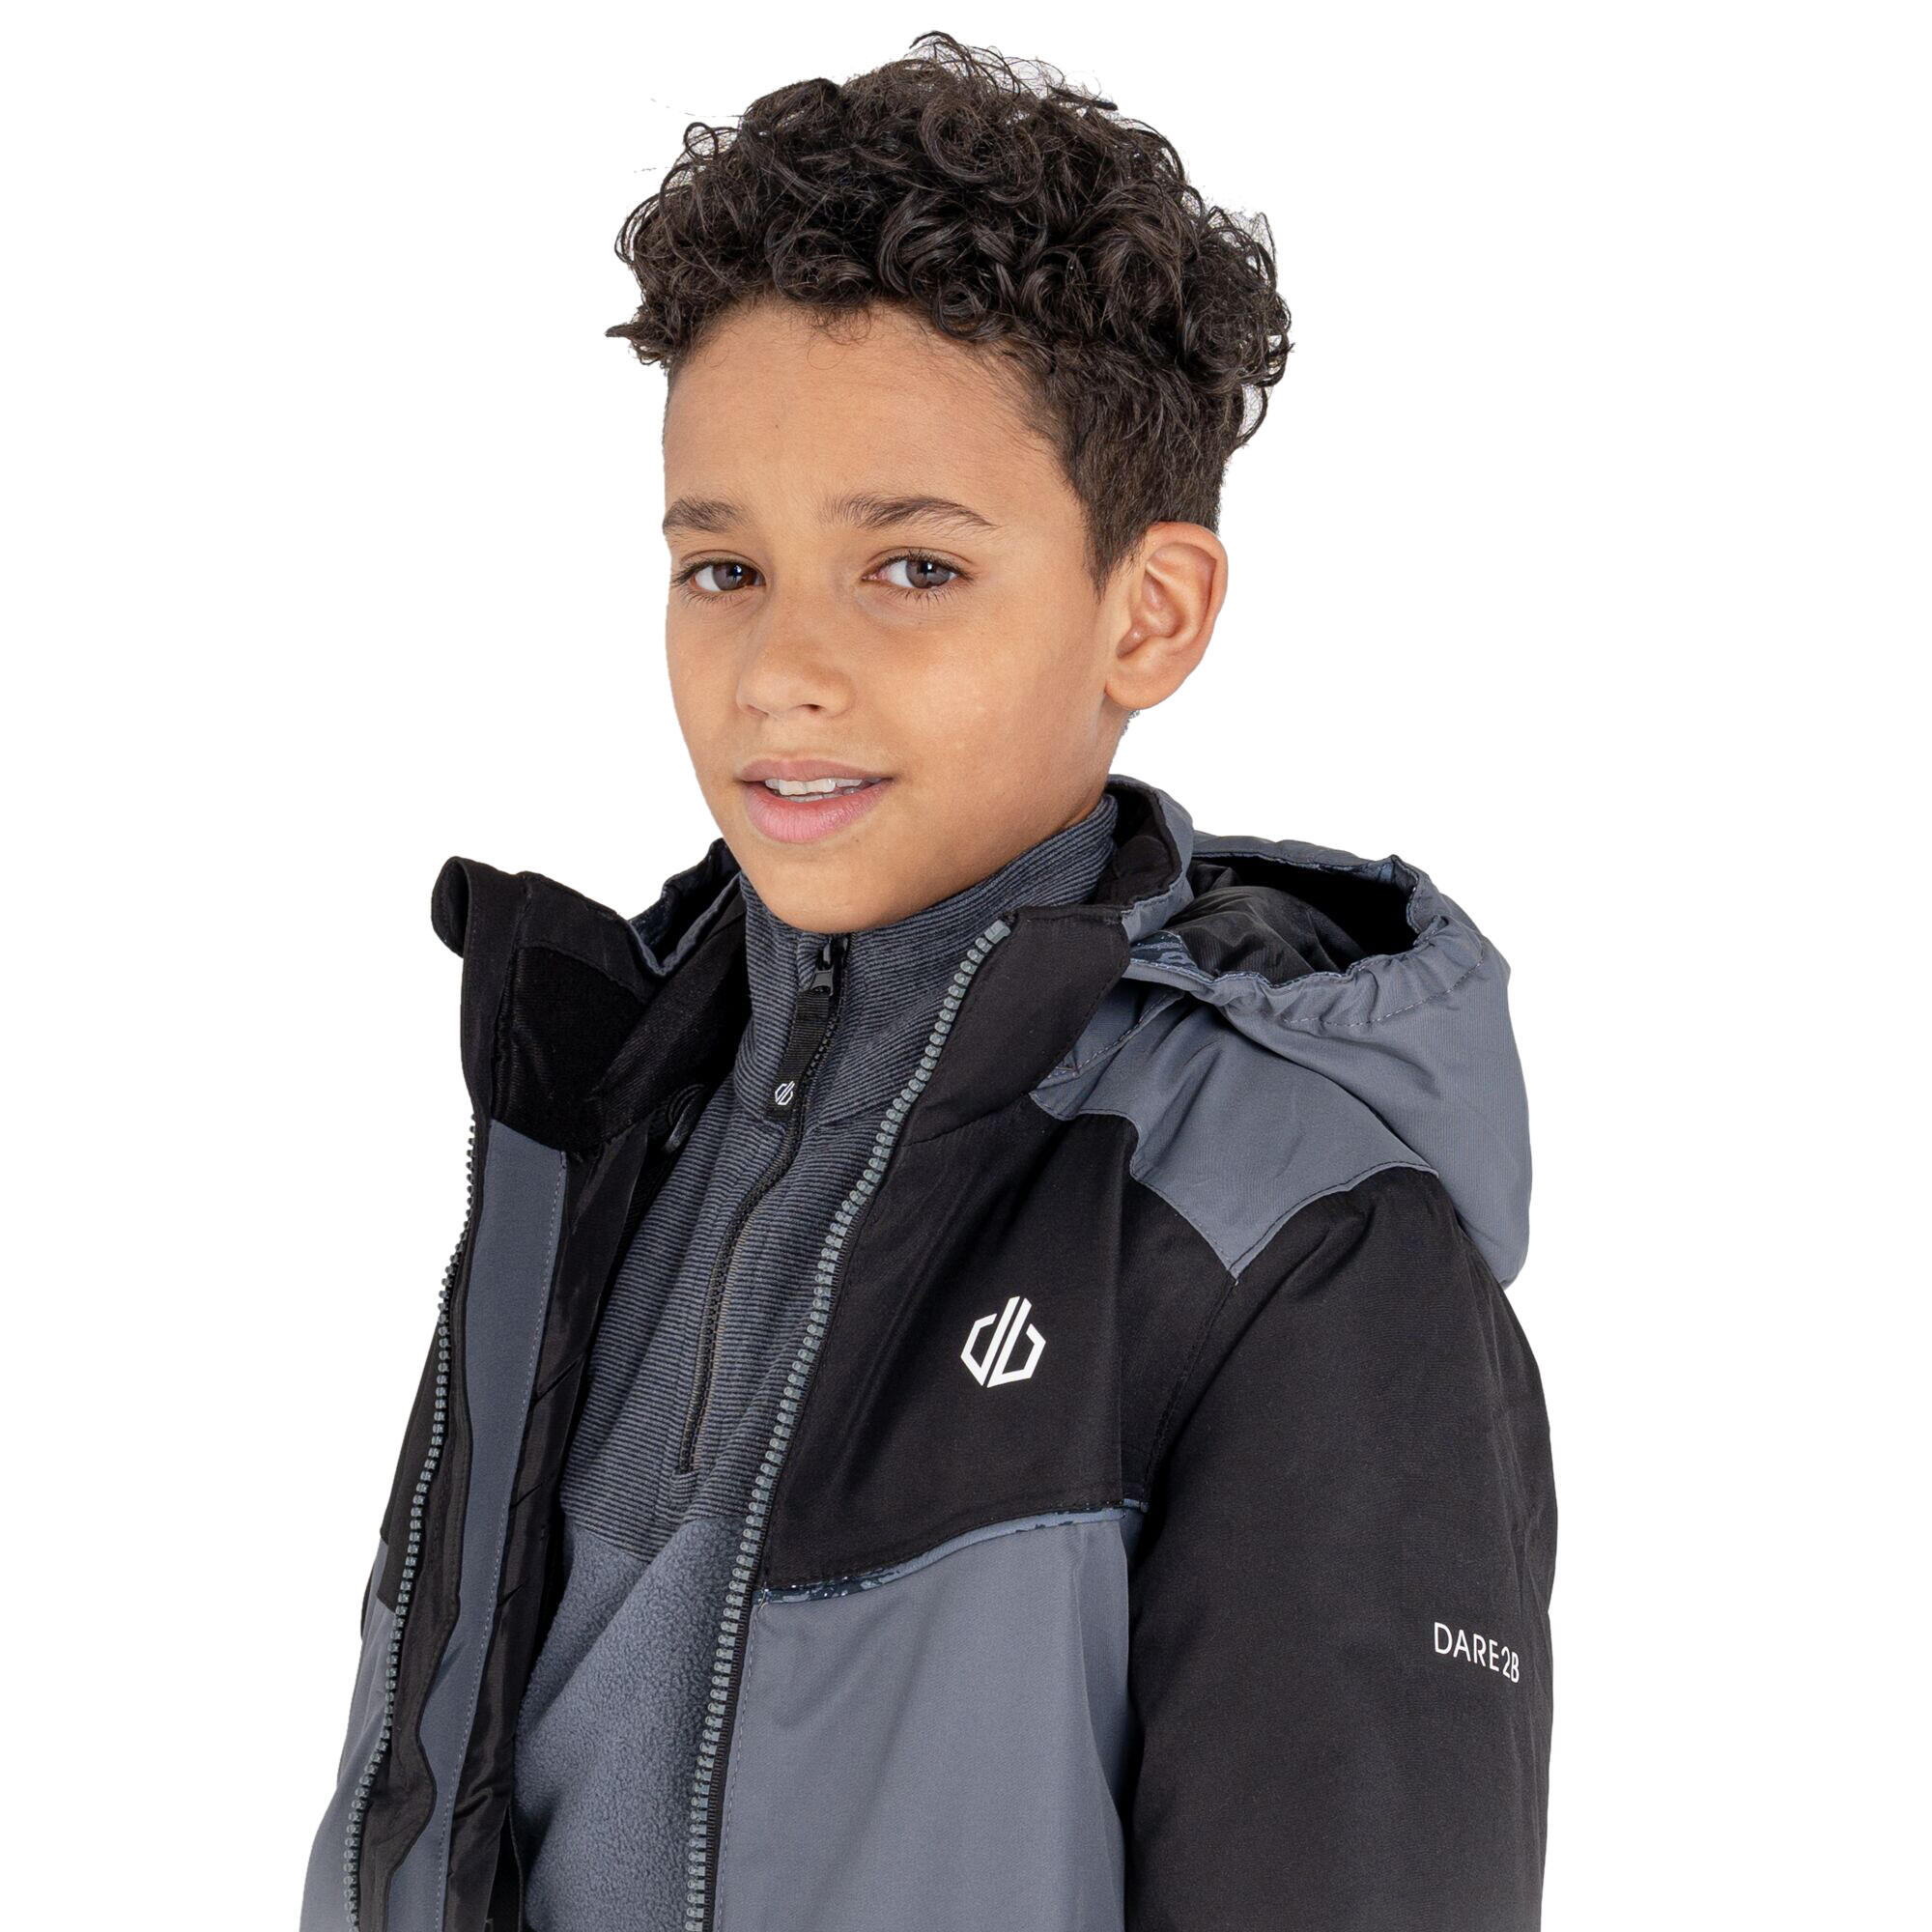 Childrens/Kids Cheerful Waterproof Ski Jacket (Black/Dark Storm Grey) 4/5